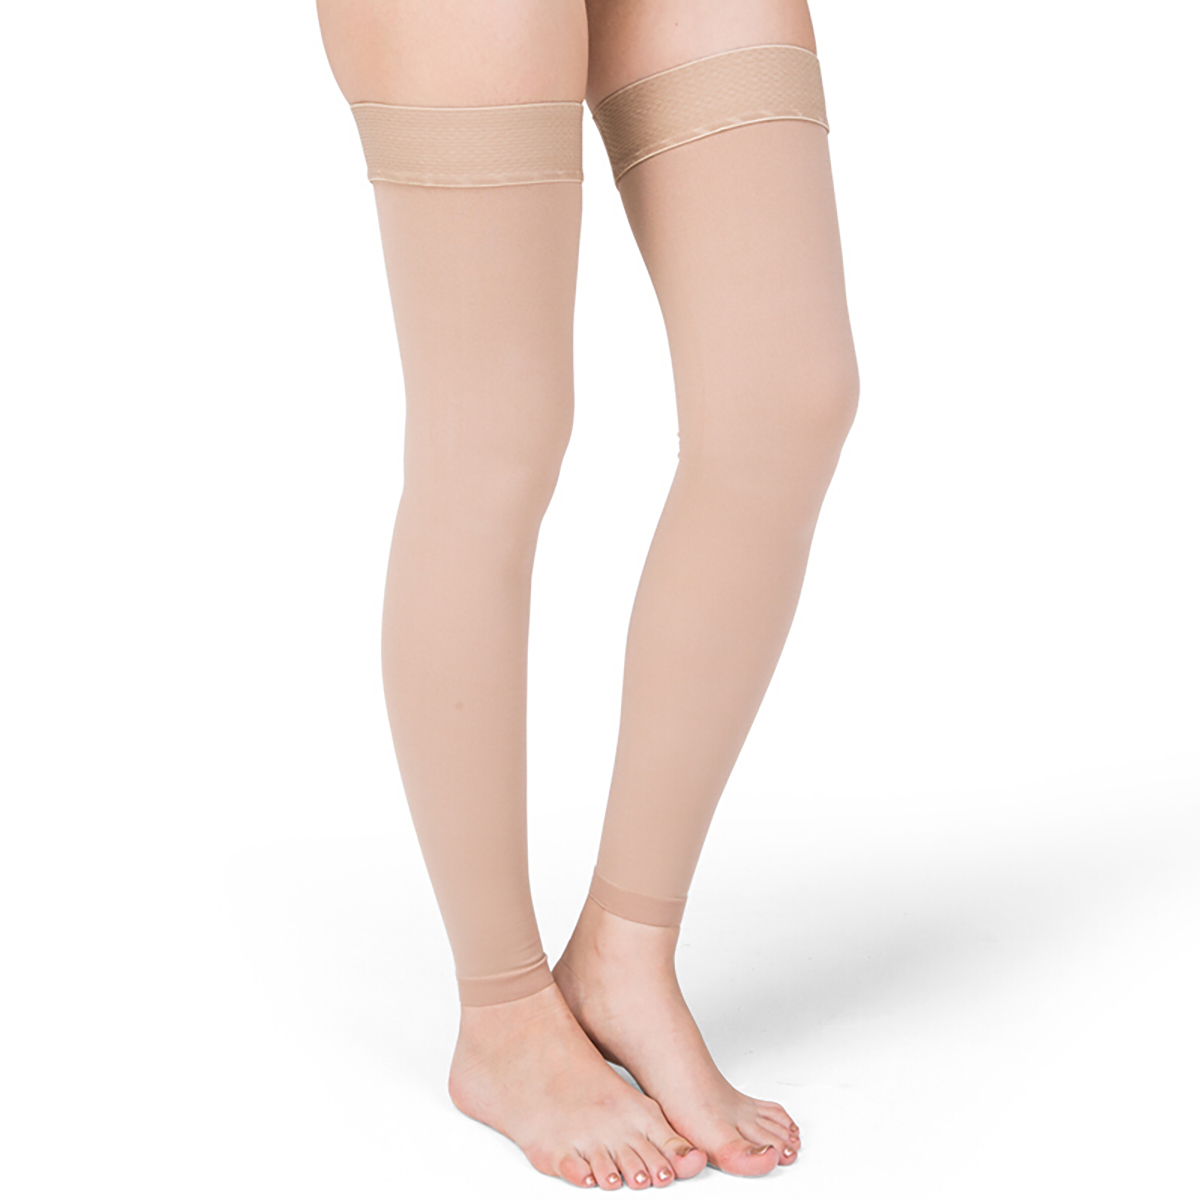 EXTREMIT-EASE Compression Garment 30-50 mmHg Lower Leg Compression